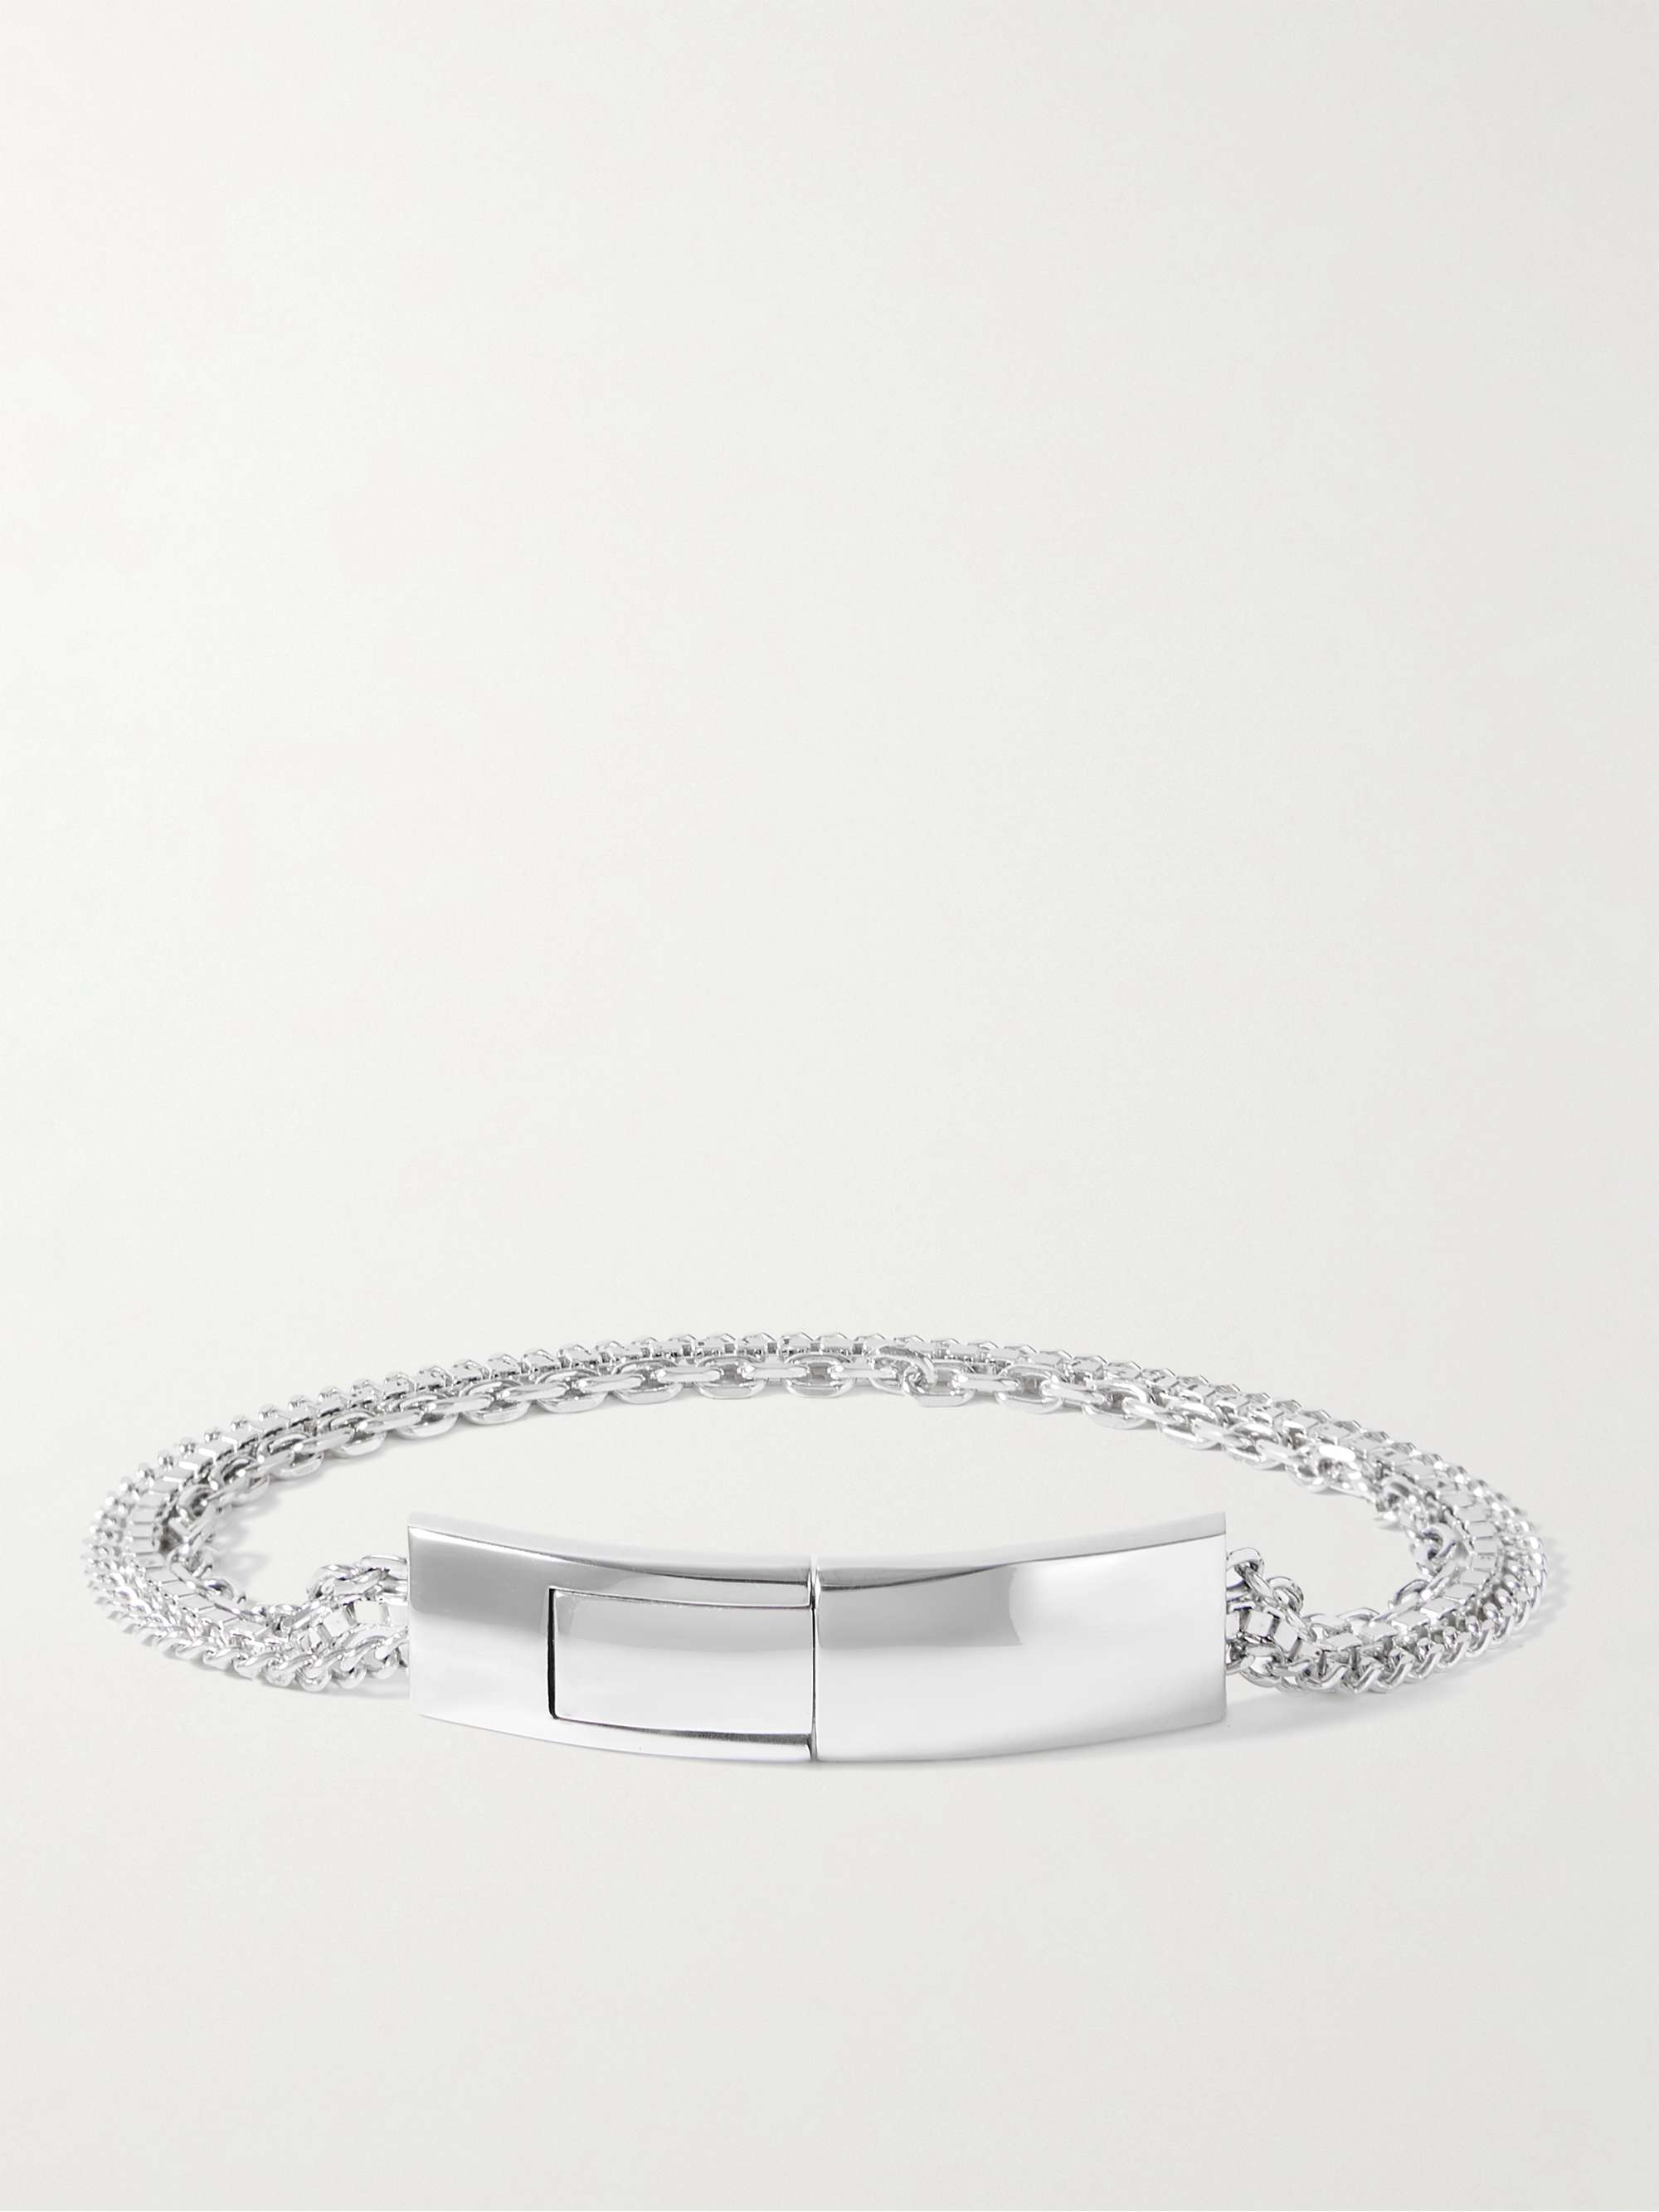 Bottega Veneta Gold-tone Bracelet  Fashion bracelets jewelry, Gold tone  bracelet, Chains jewelry